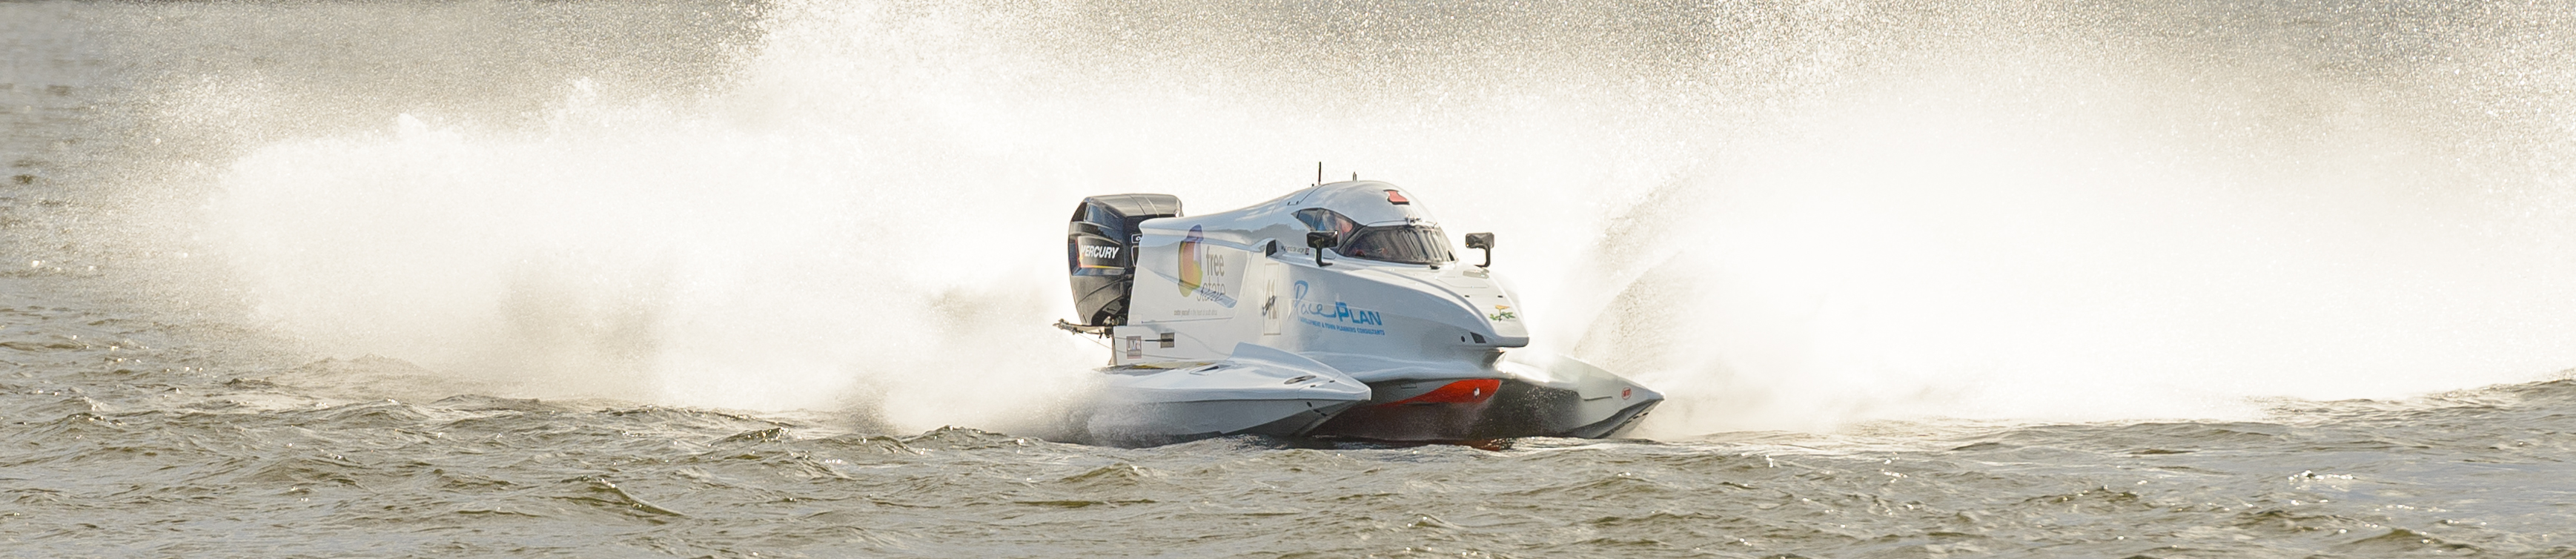 UIM F2 World Powerboat Championship in Stockholm June 2013 02